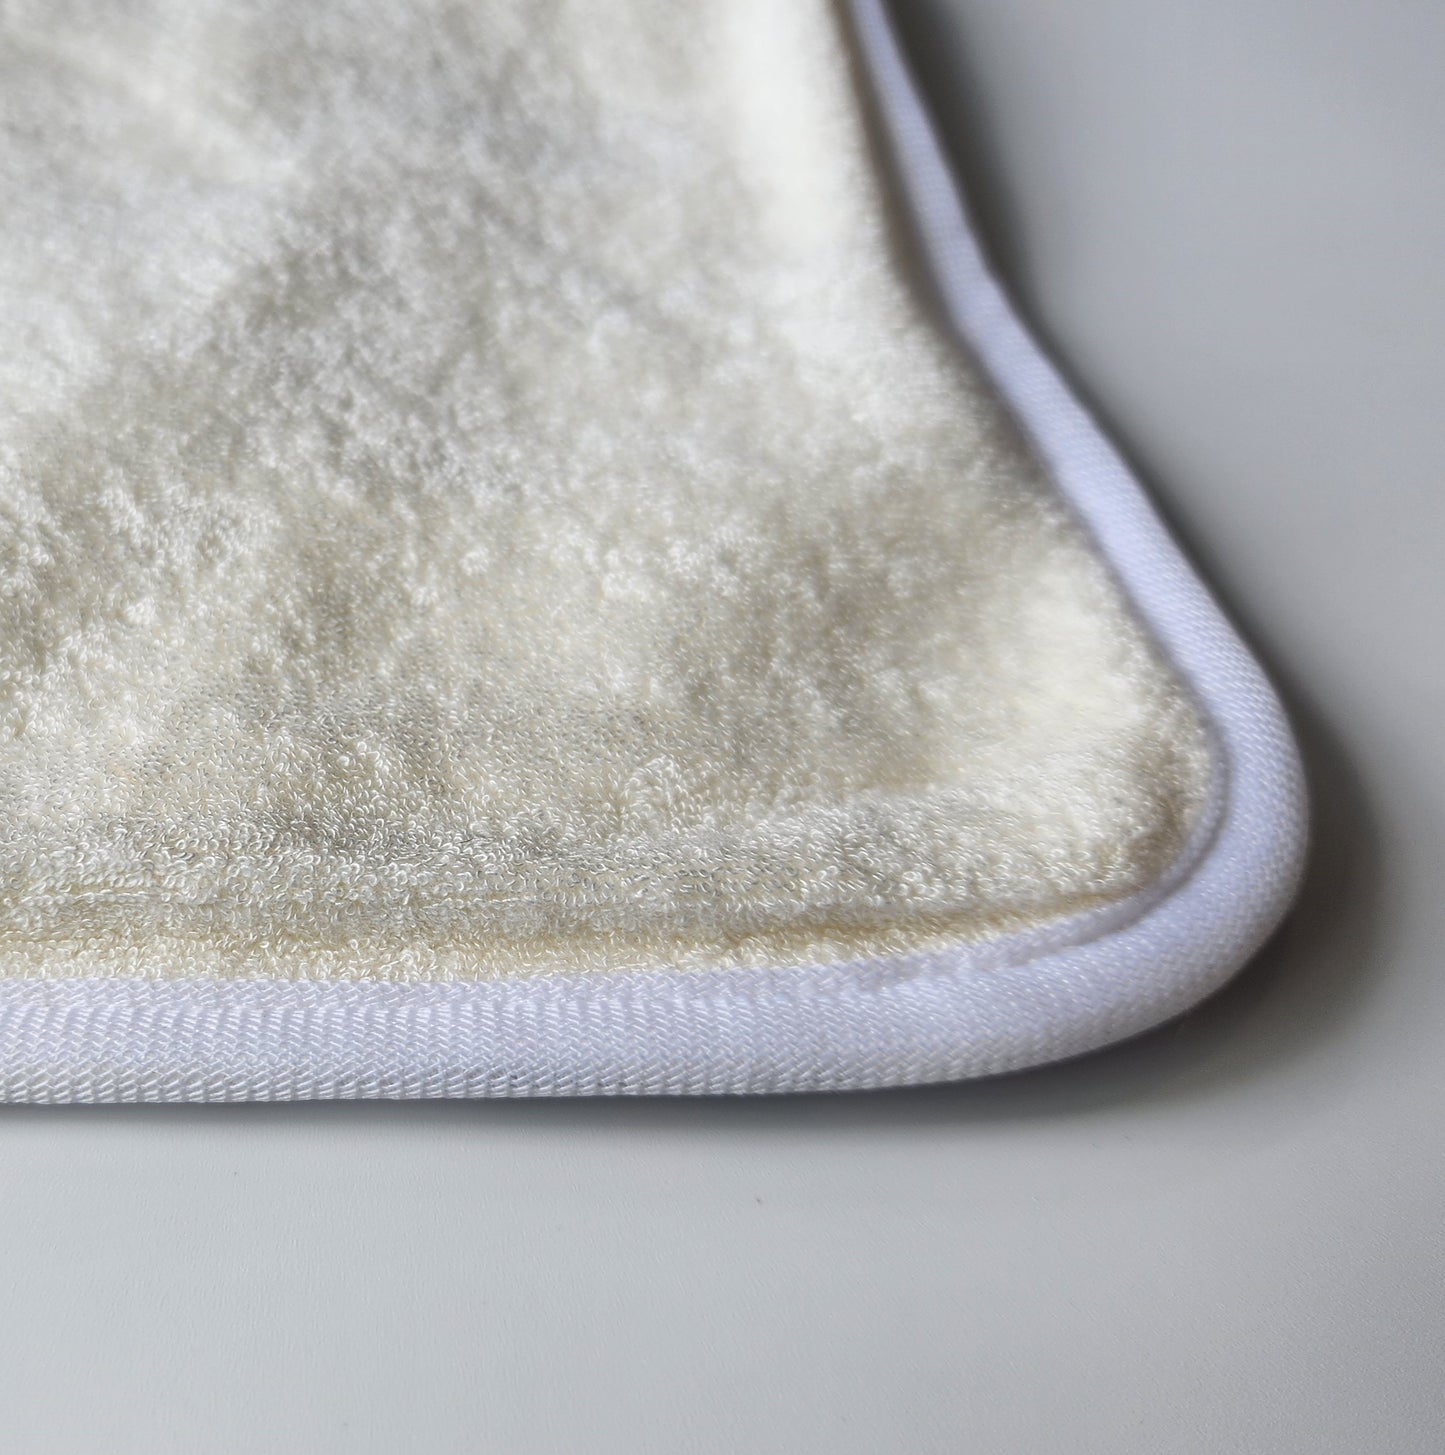 Portable Baby Change Mat | White Daisies Print